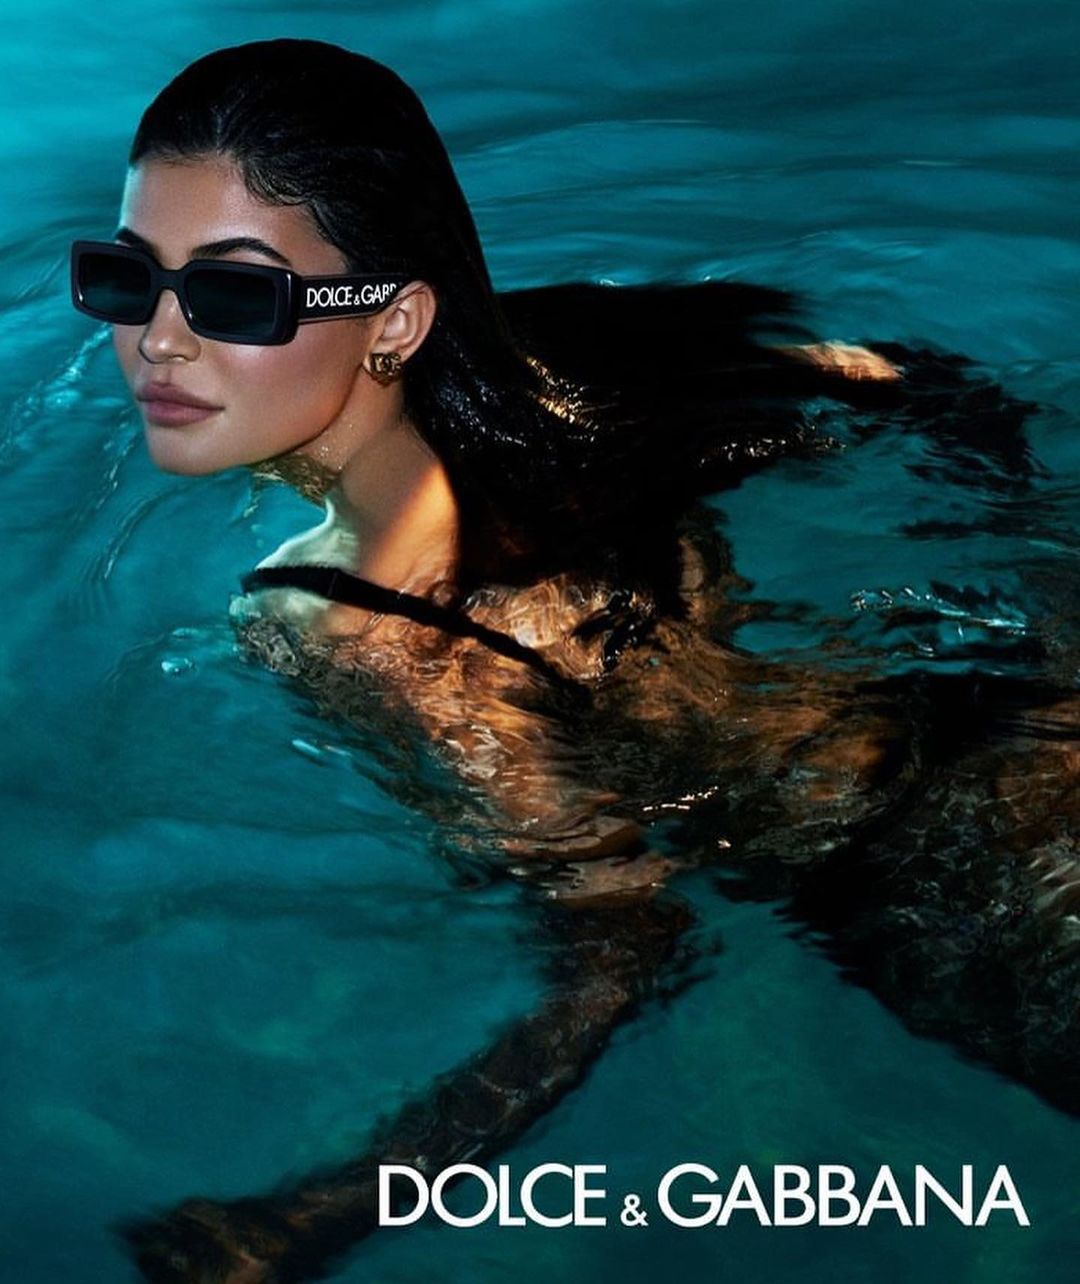 Kylie Jenner Promotes Dolce & Gabbana During Photoshoot